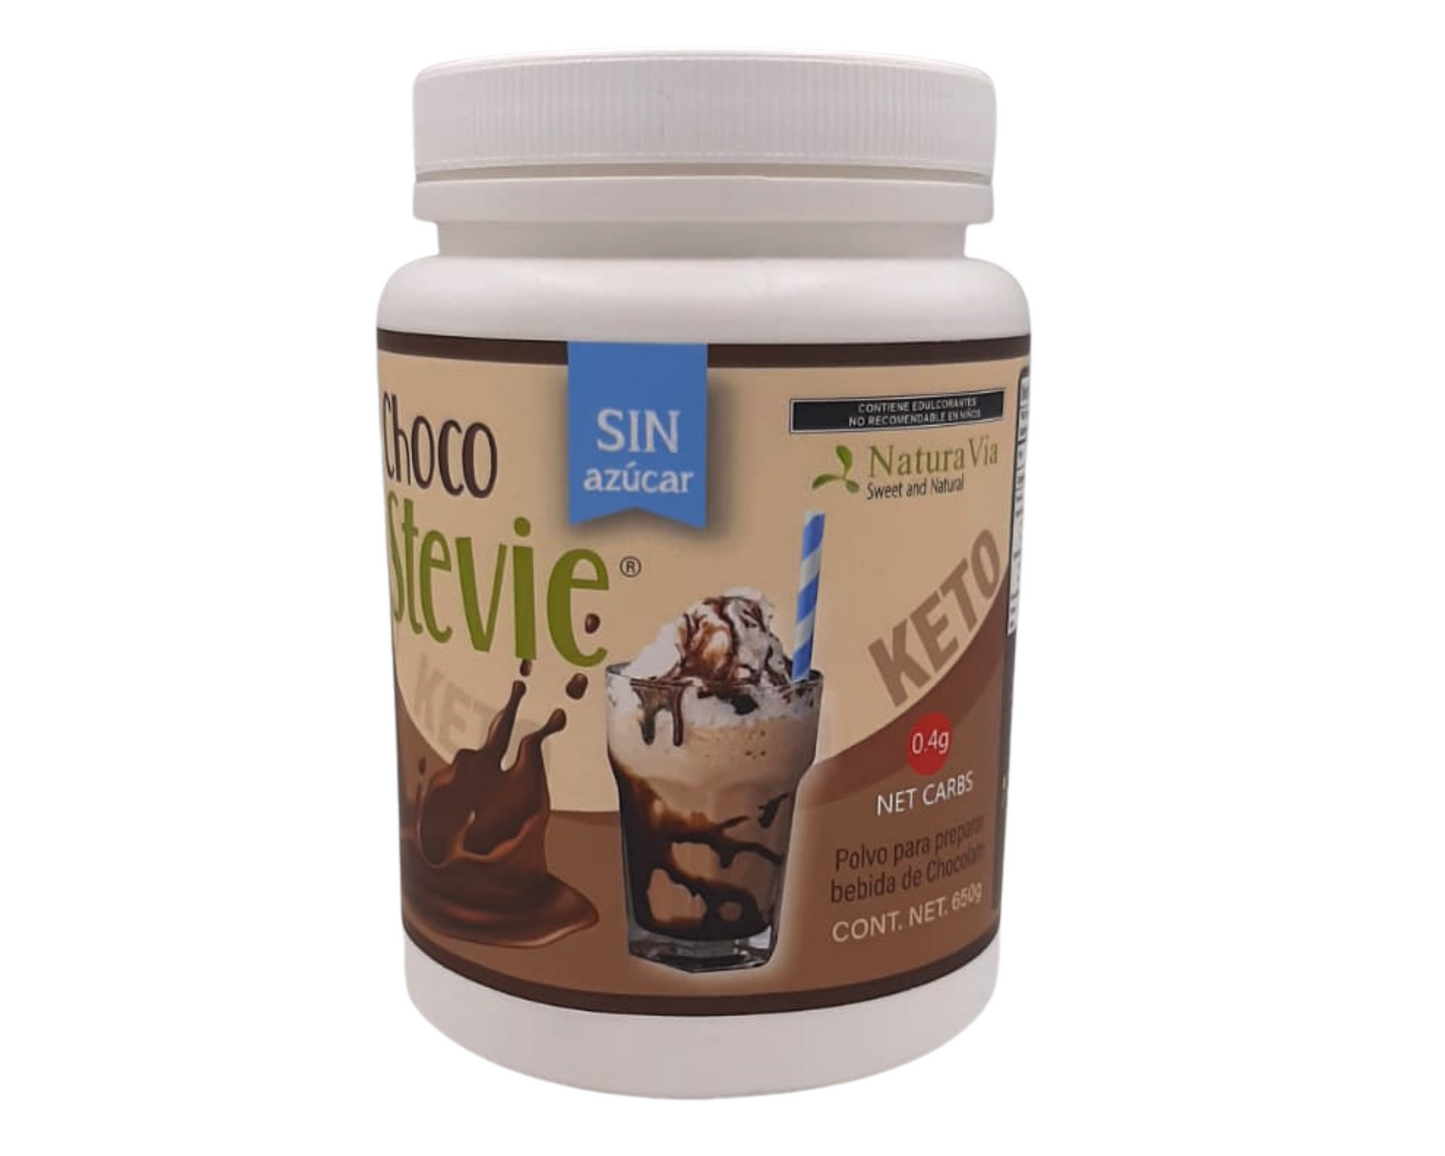 ChocoStevie - Powder to prepare sugar-free Chocolate drink